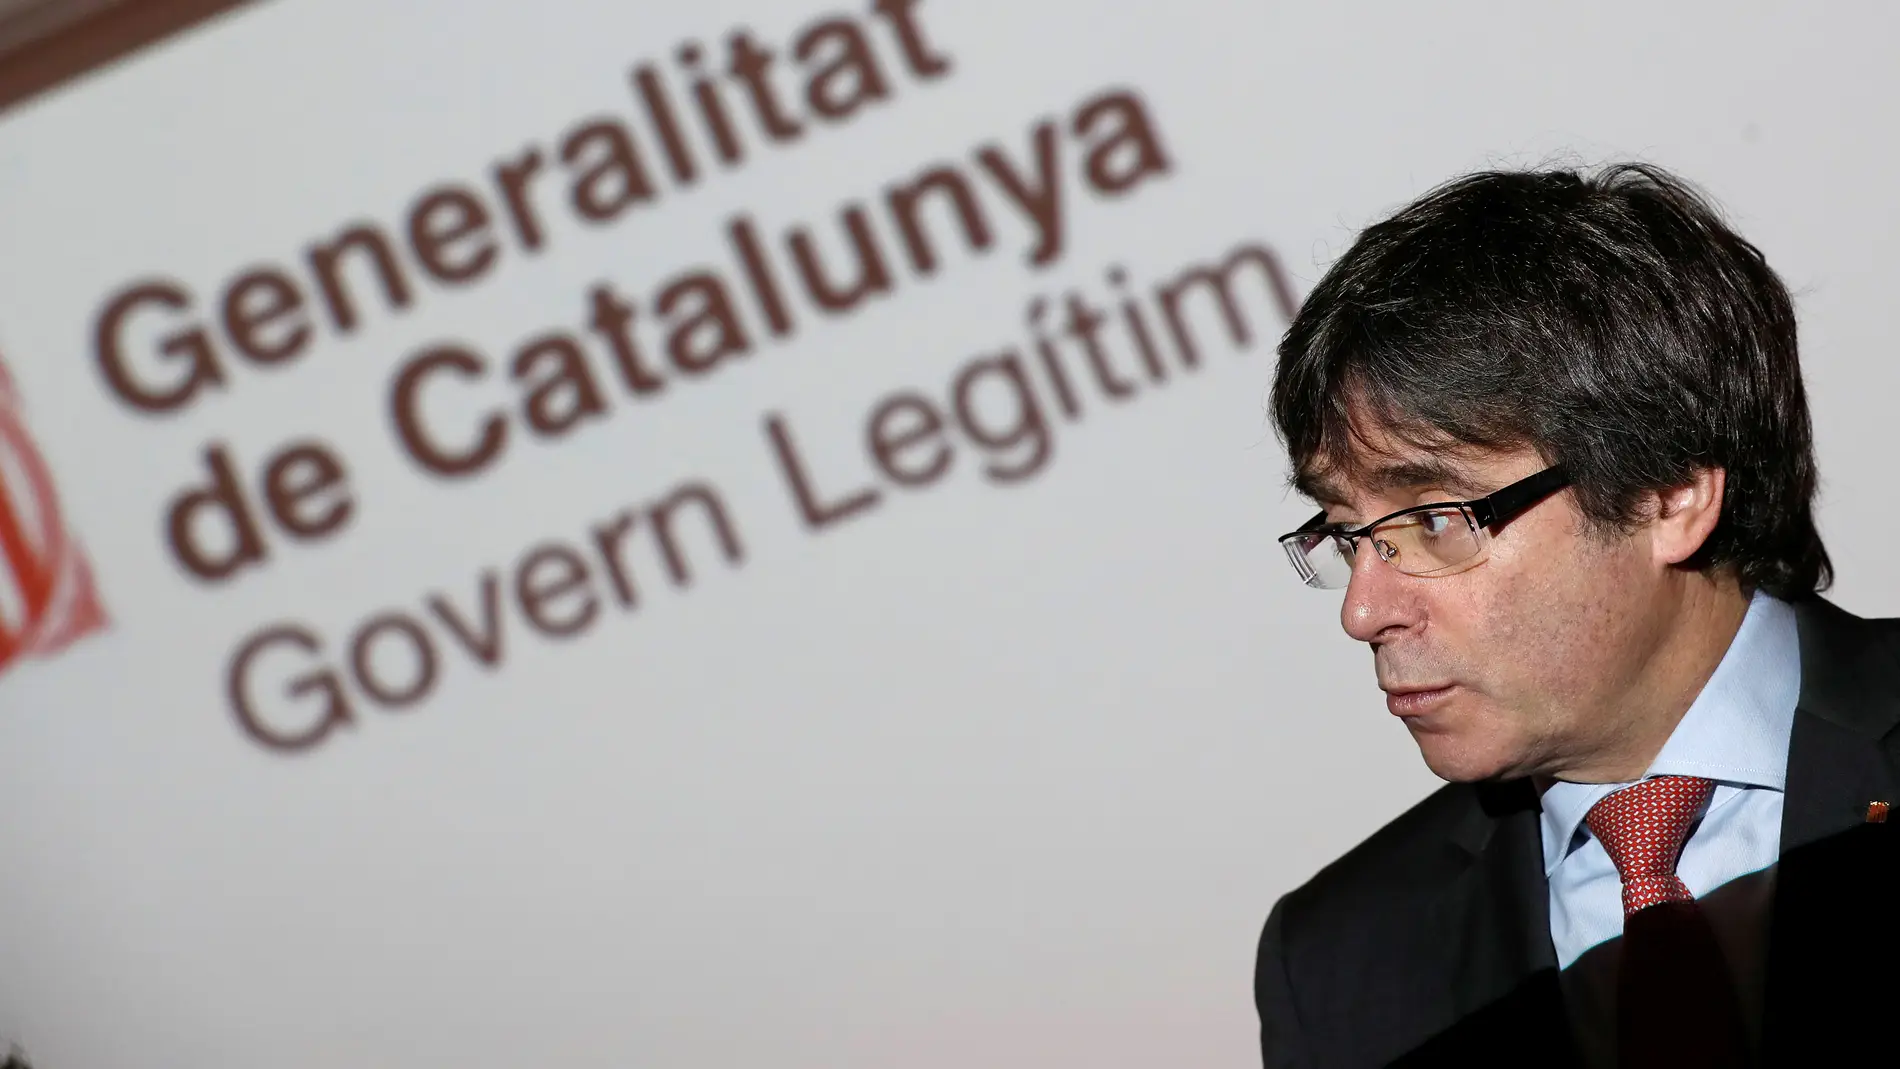 El expresidente de la Generalitat, Carles Puigdemont